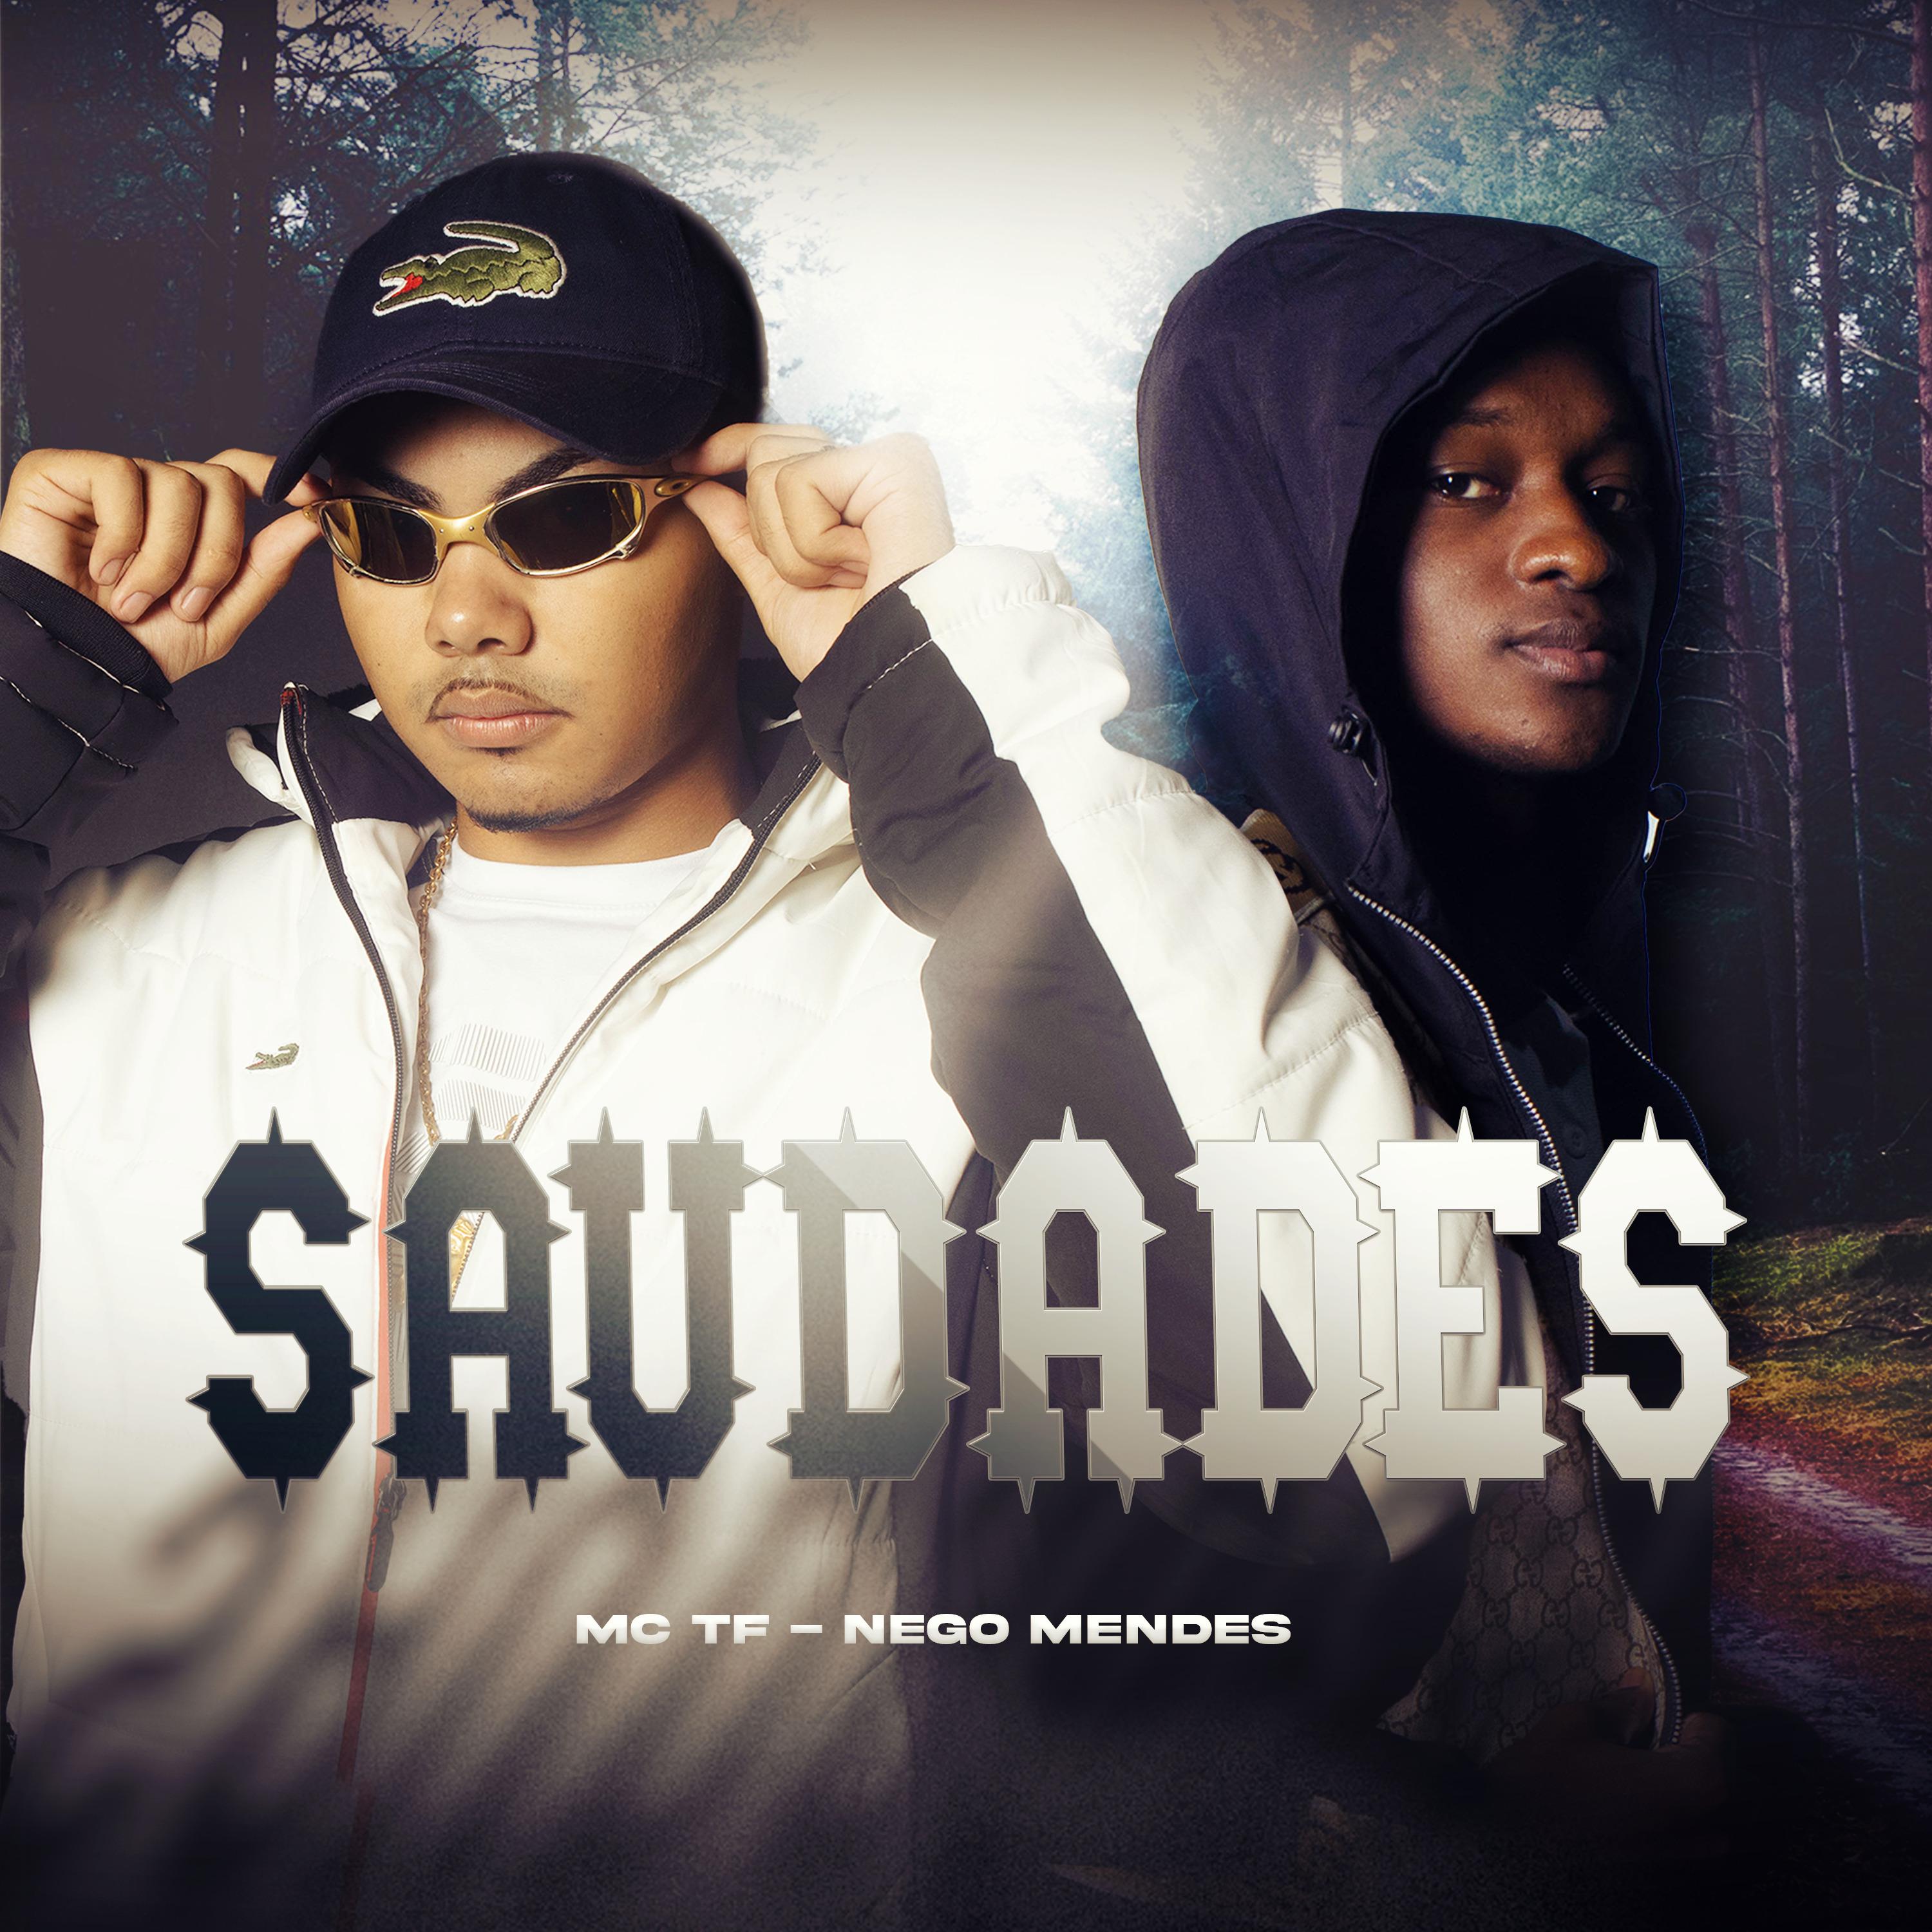 Постер альбома Saudades